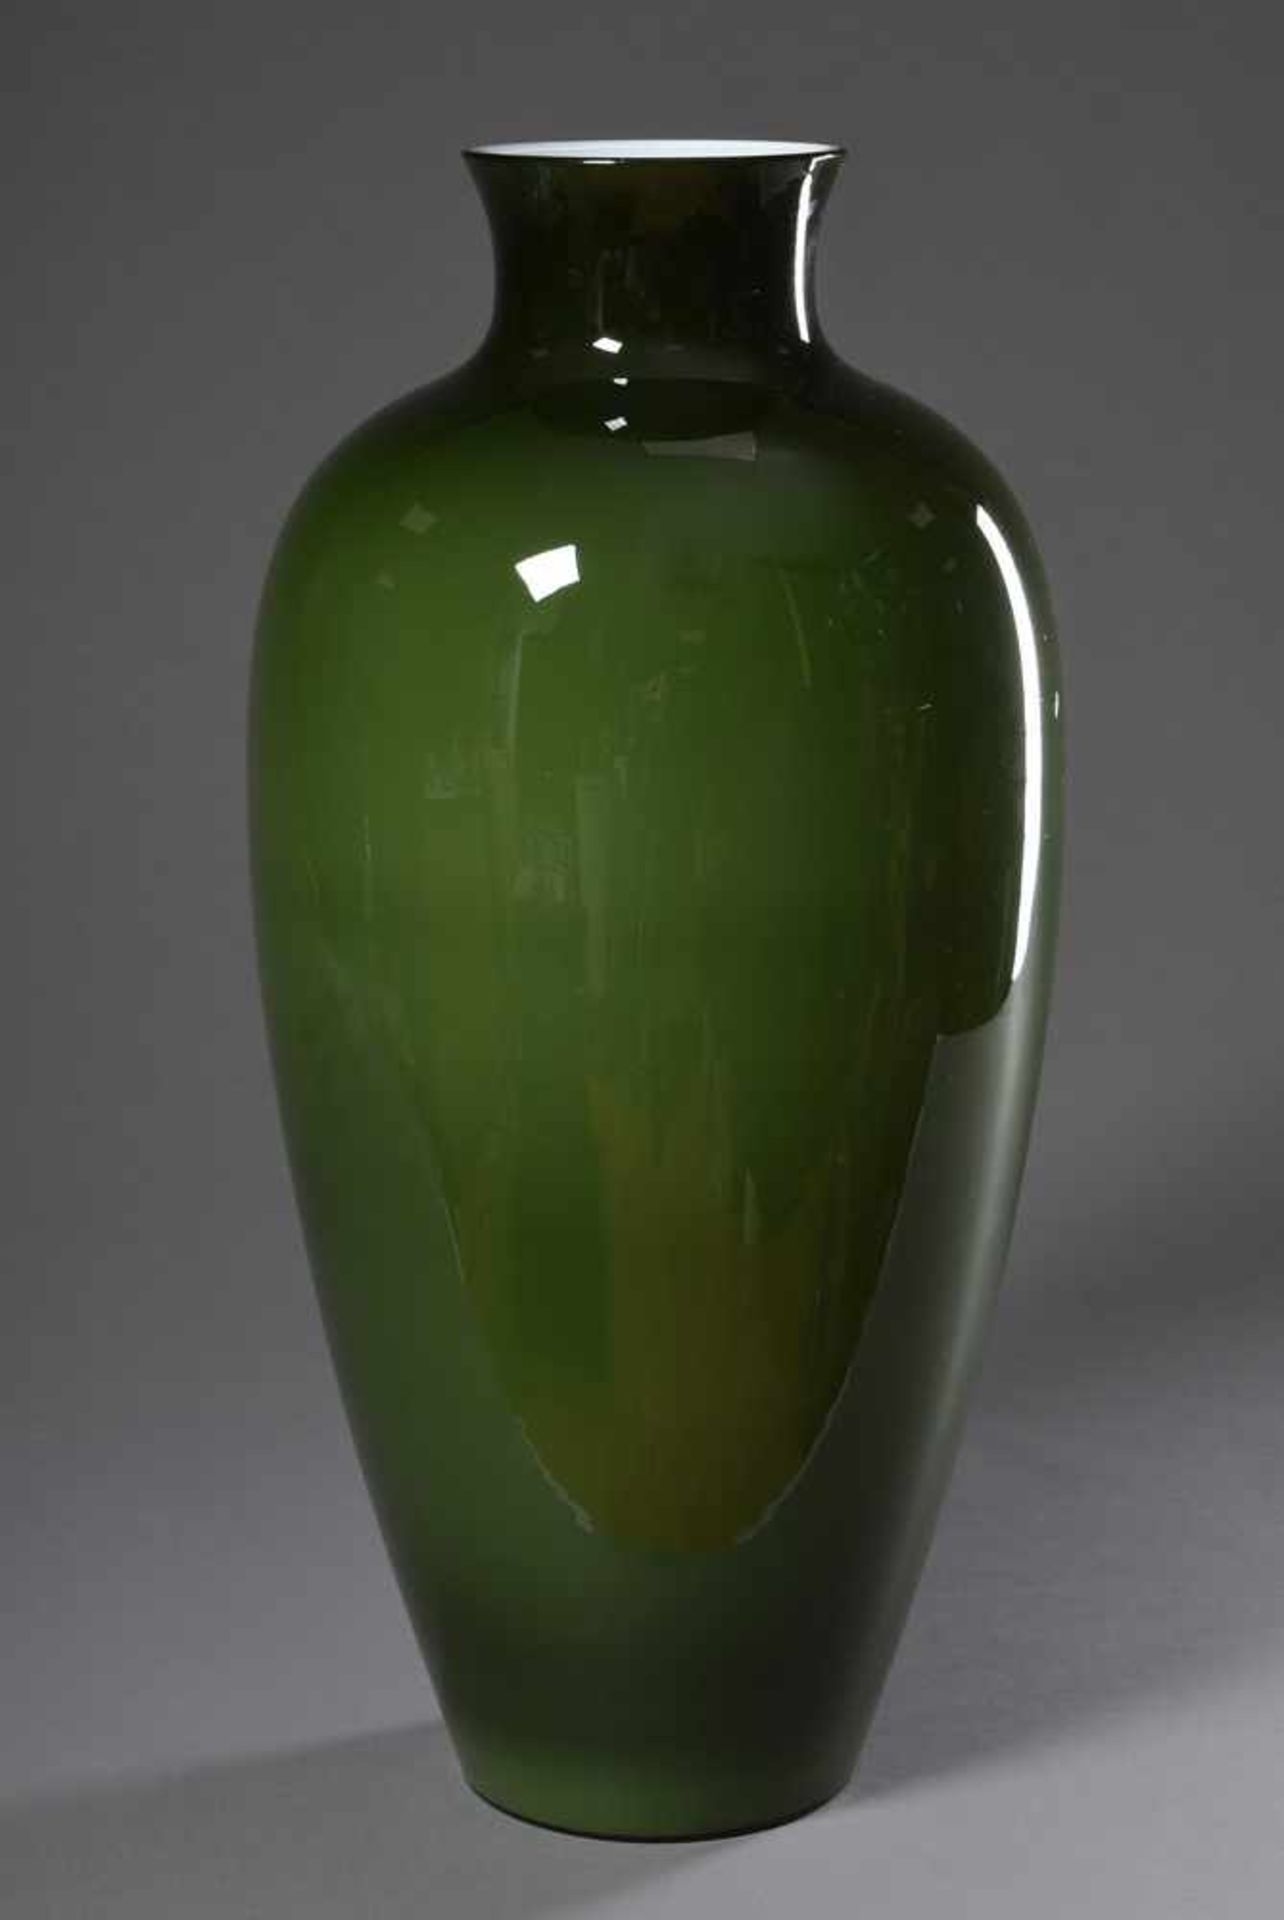 Große Venini Bodenvase in Balusterform, grün/weiß überfangen, H. 60cmLarge Venini floor vase in